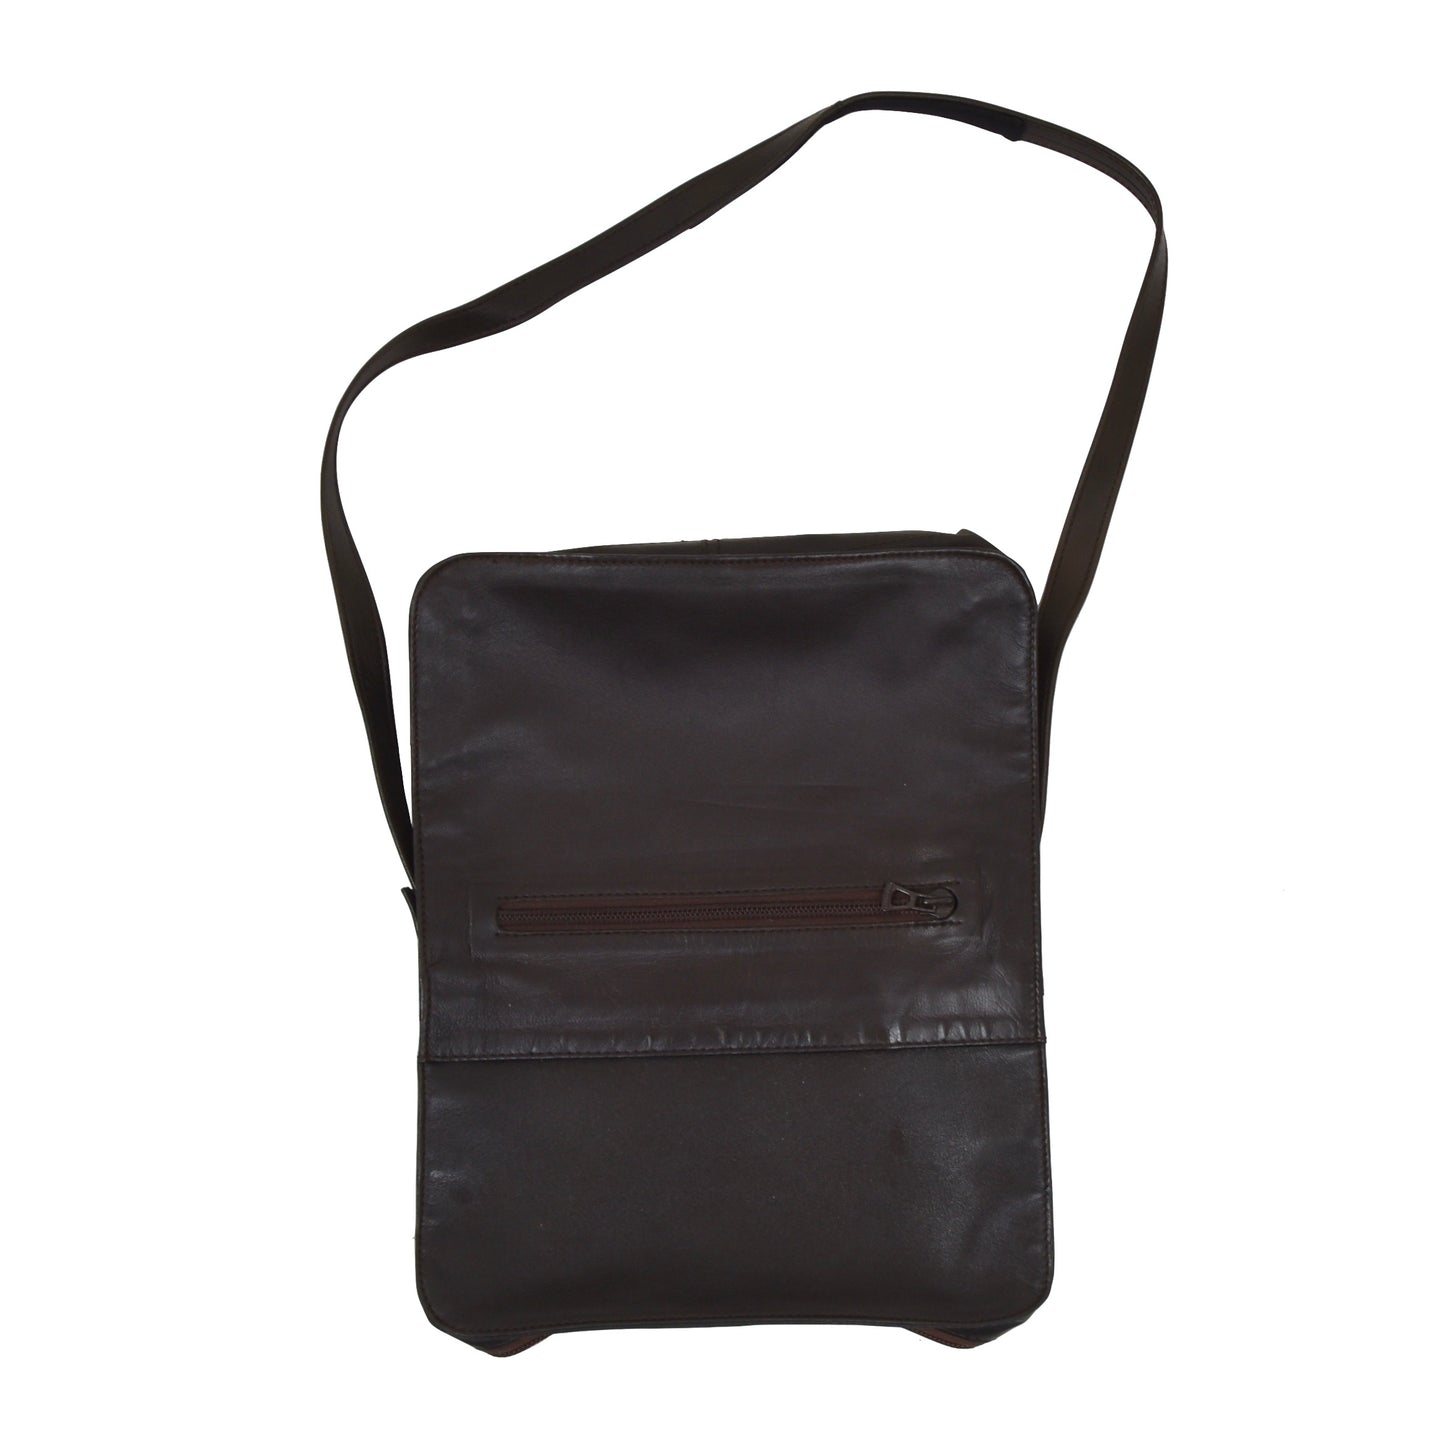 Vimar Paris Lightweight Leather Bag - Brown